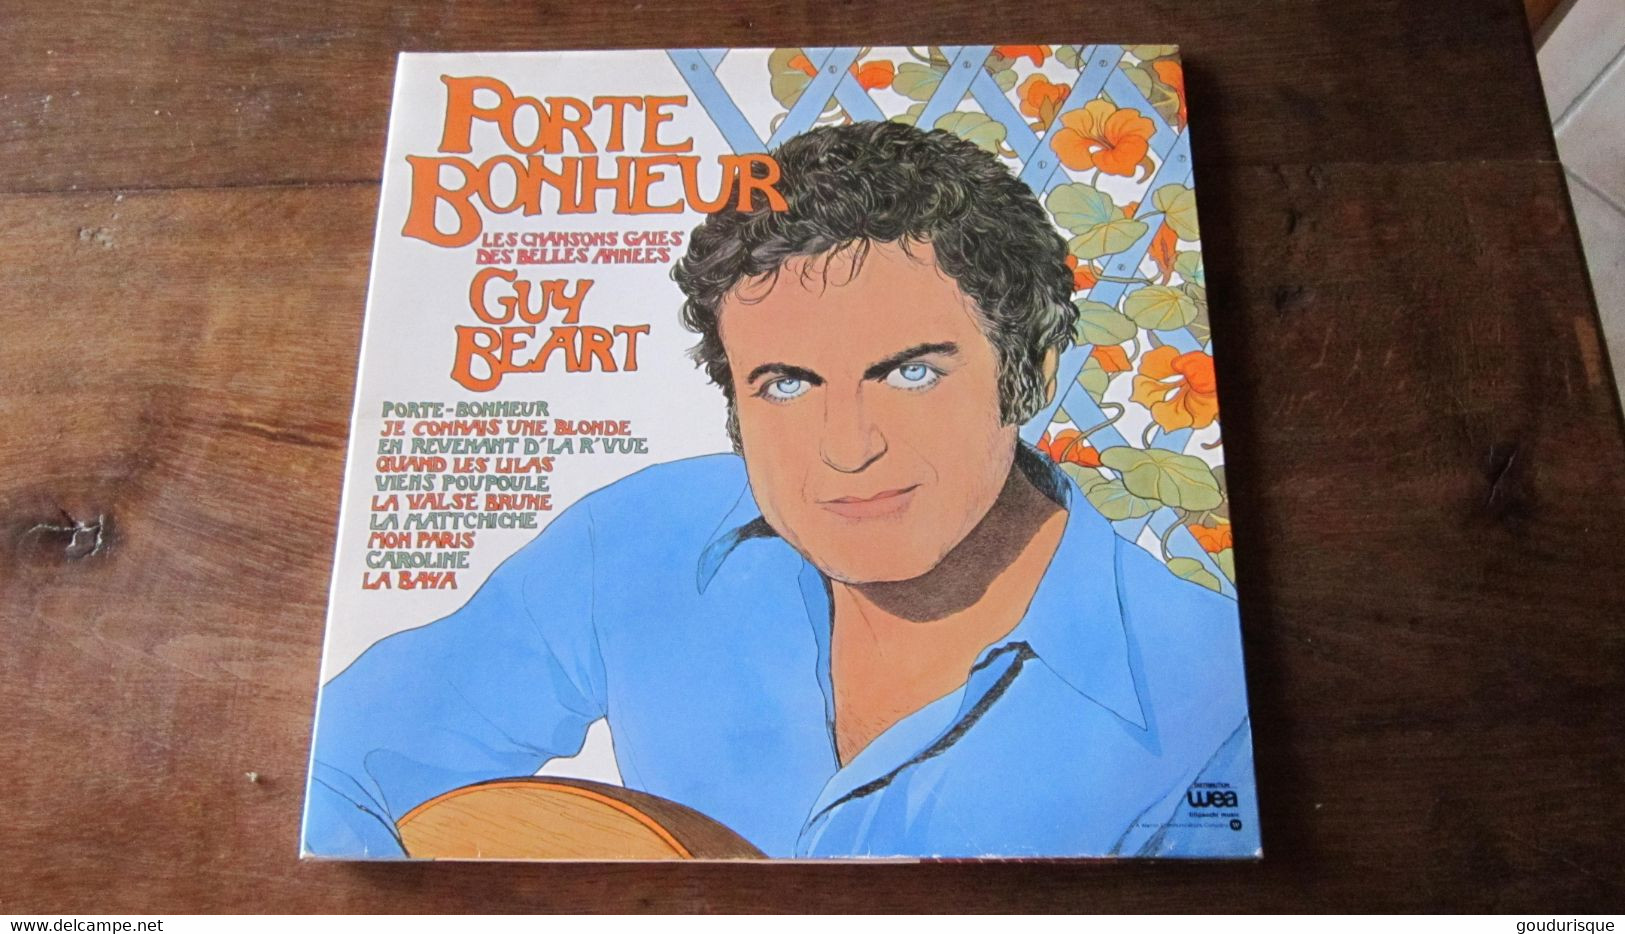 EO GUY BEART PORTE BONHEUR COUVERTURE ILLUSTRATION ANNIE GOETZINGER - Schallplatten & CD